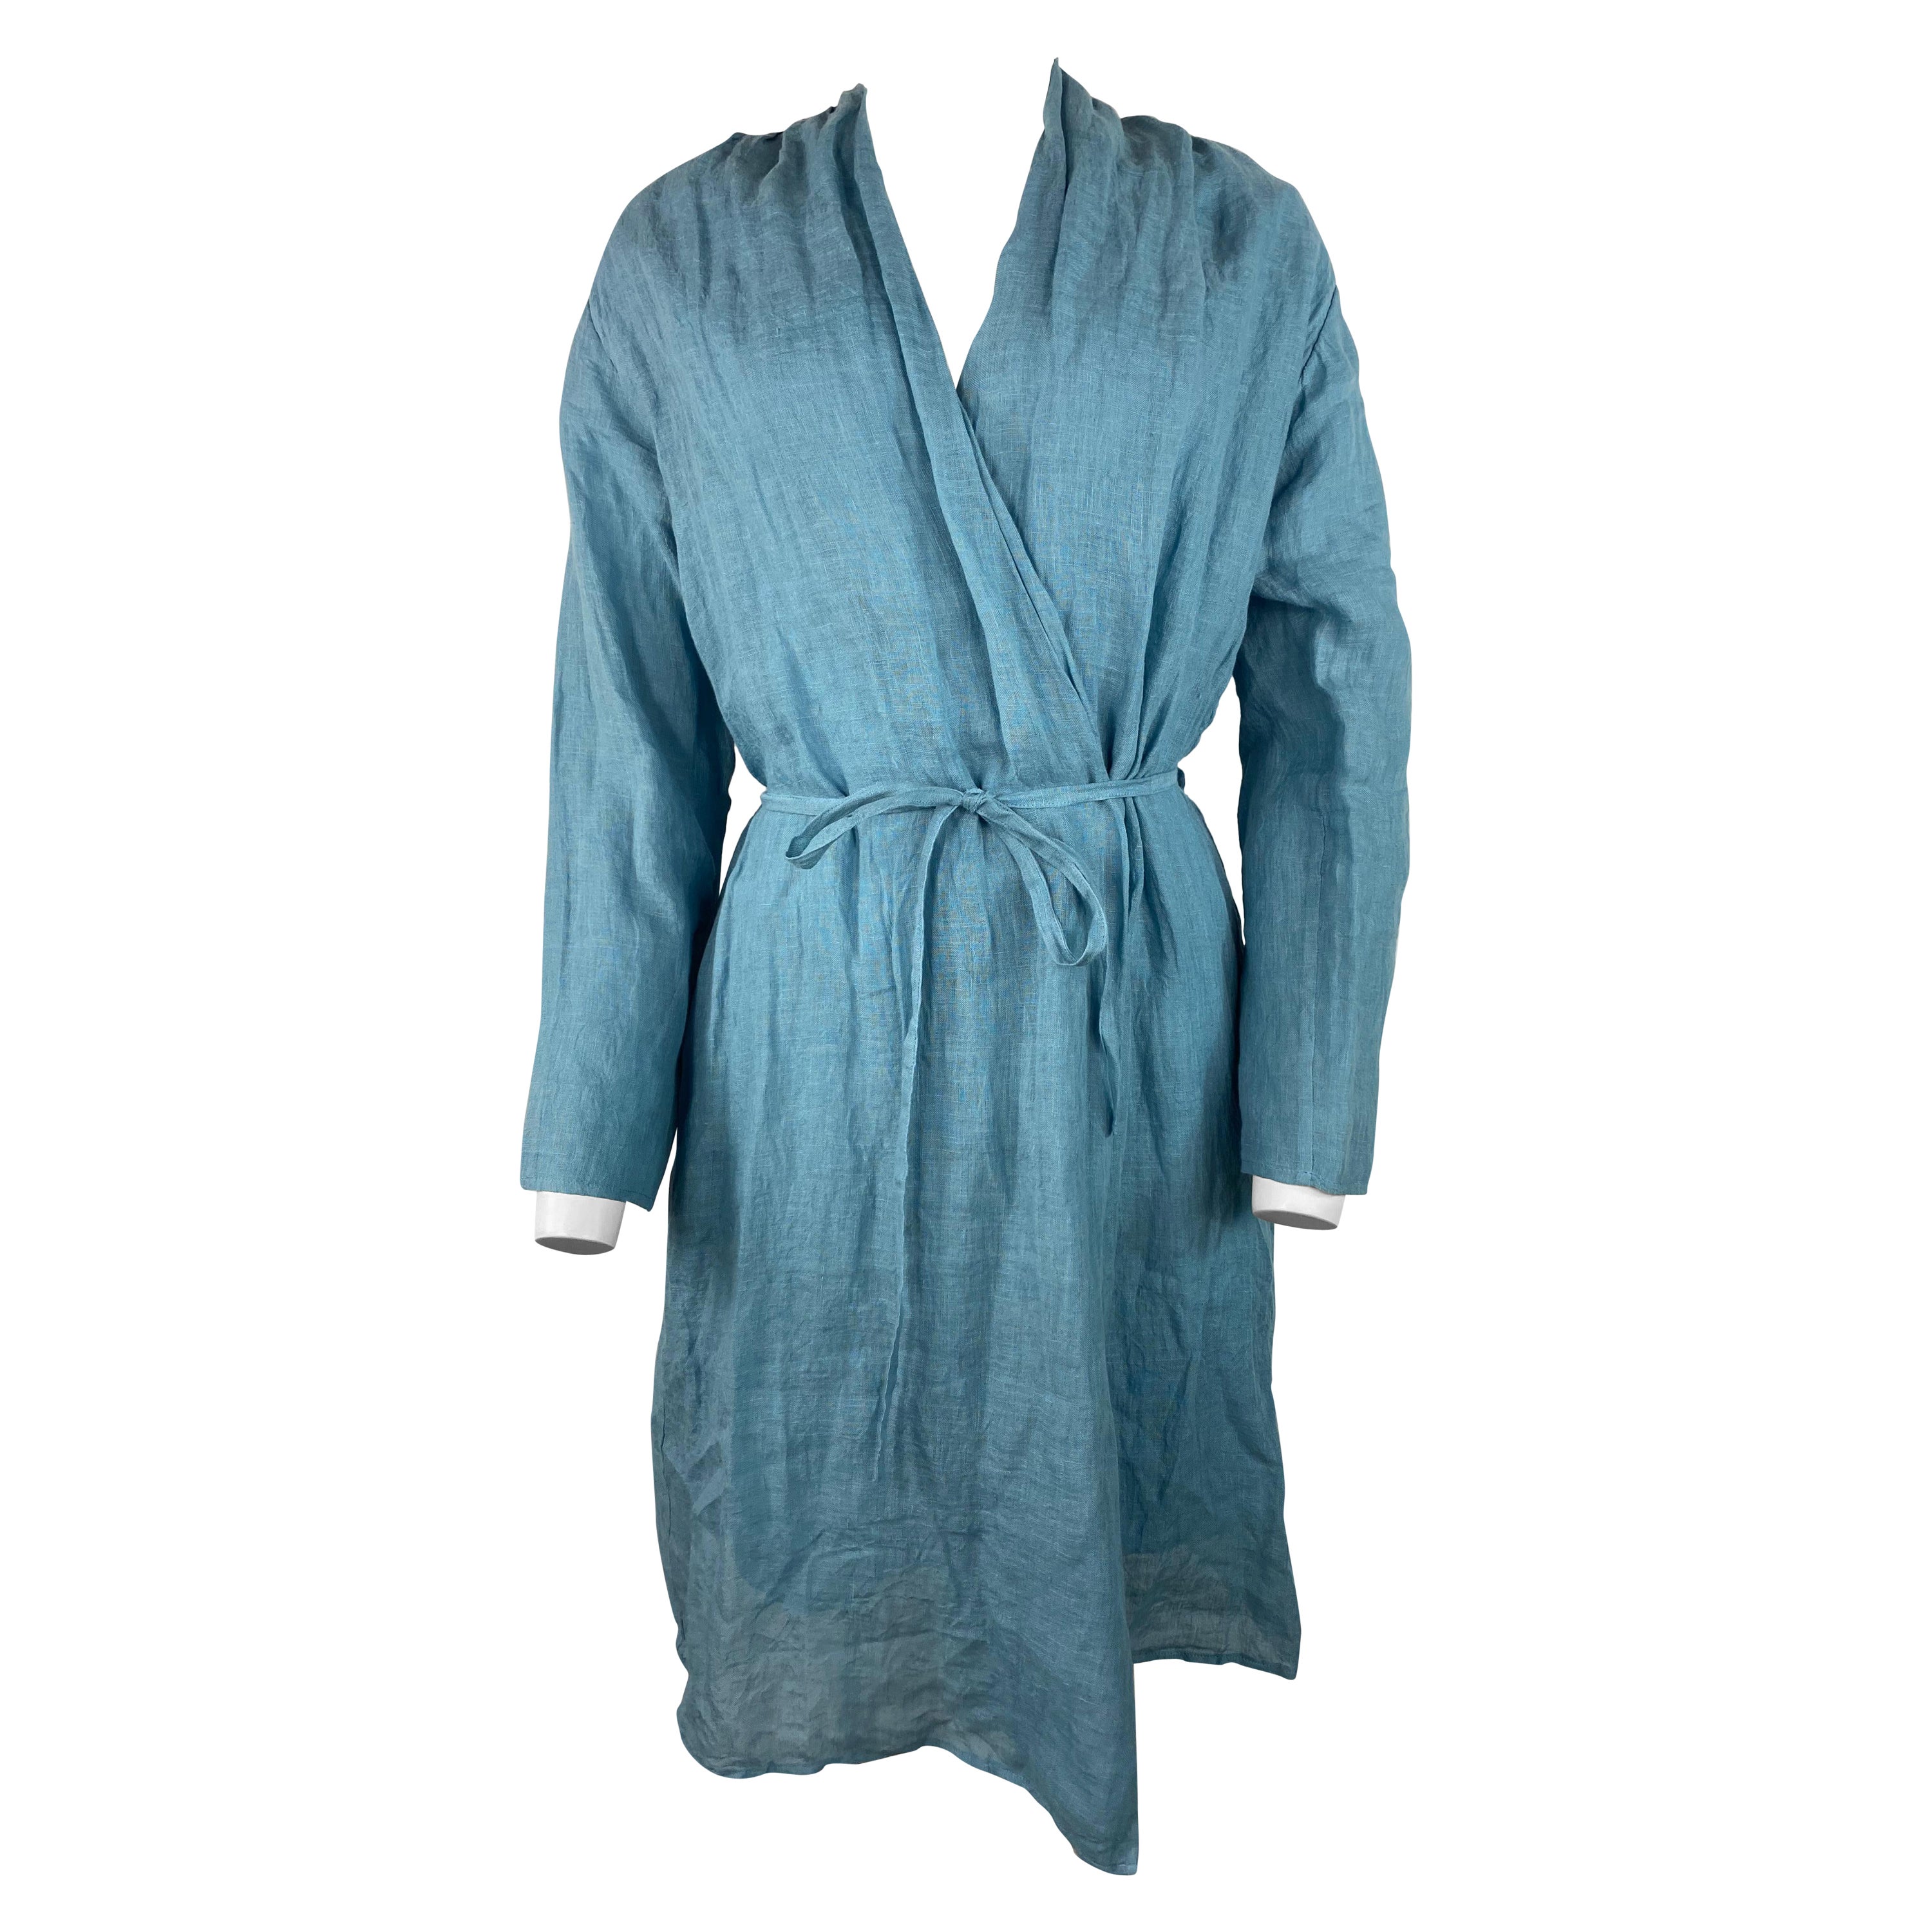 Enrico Blue Linen Dressing Gown Jacket Dress, Size 38